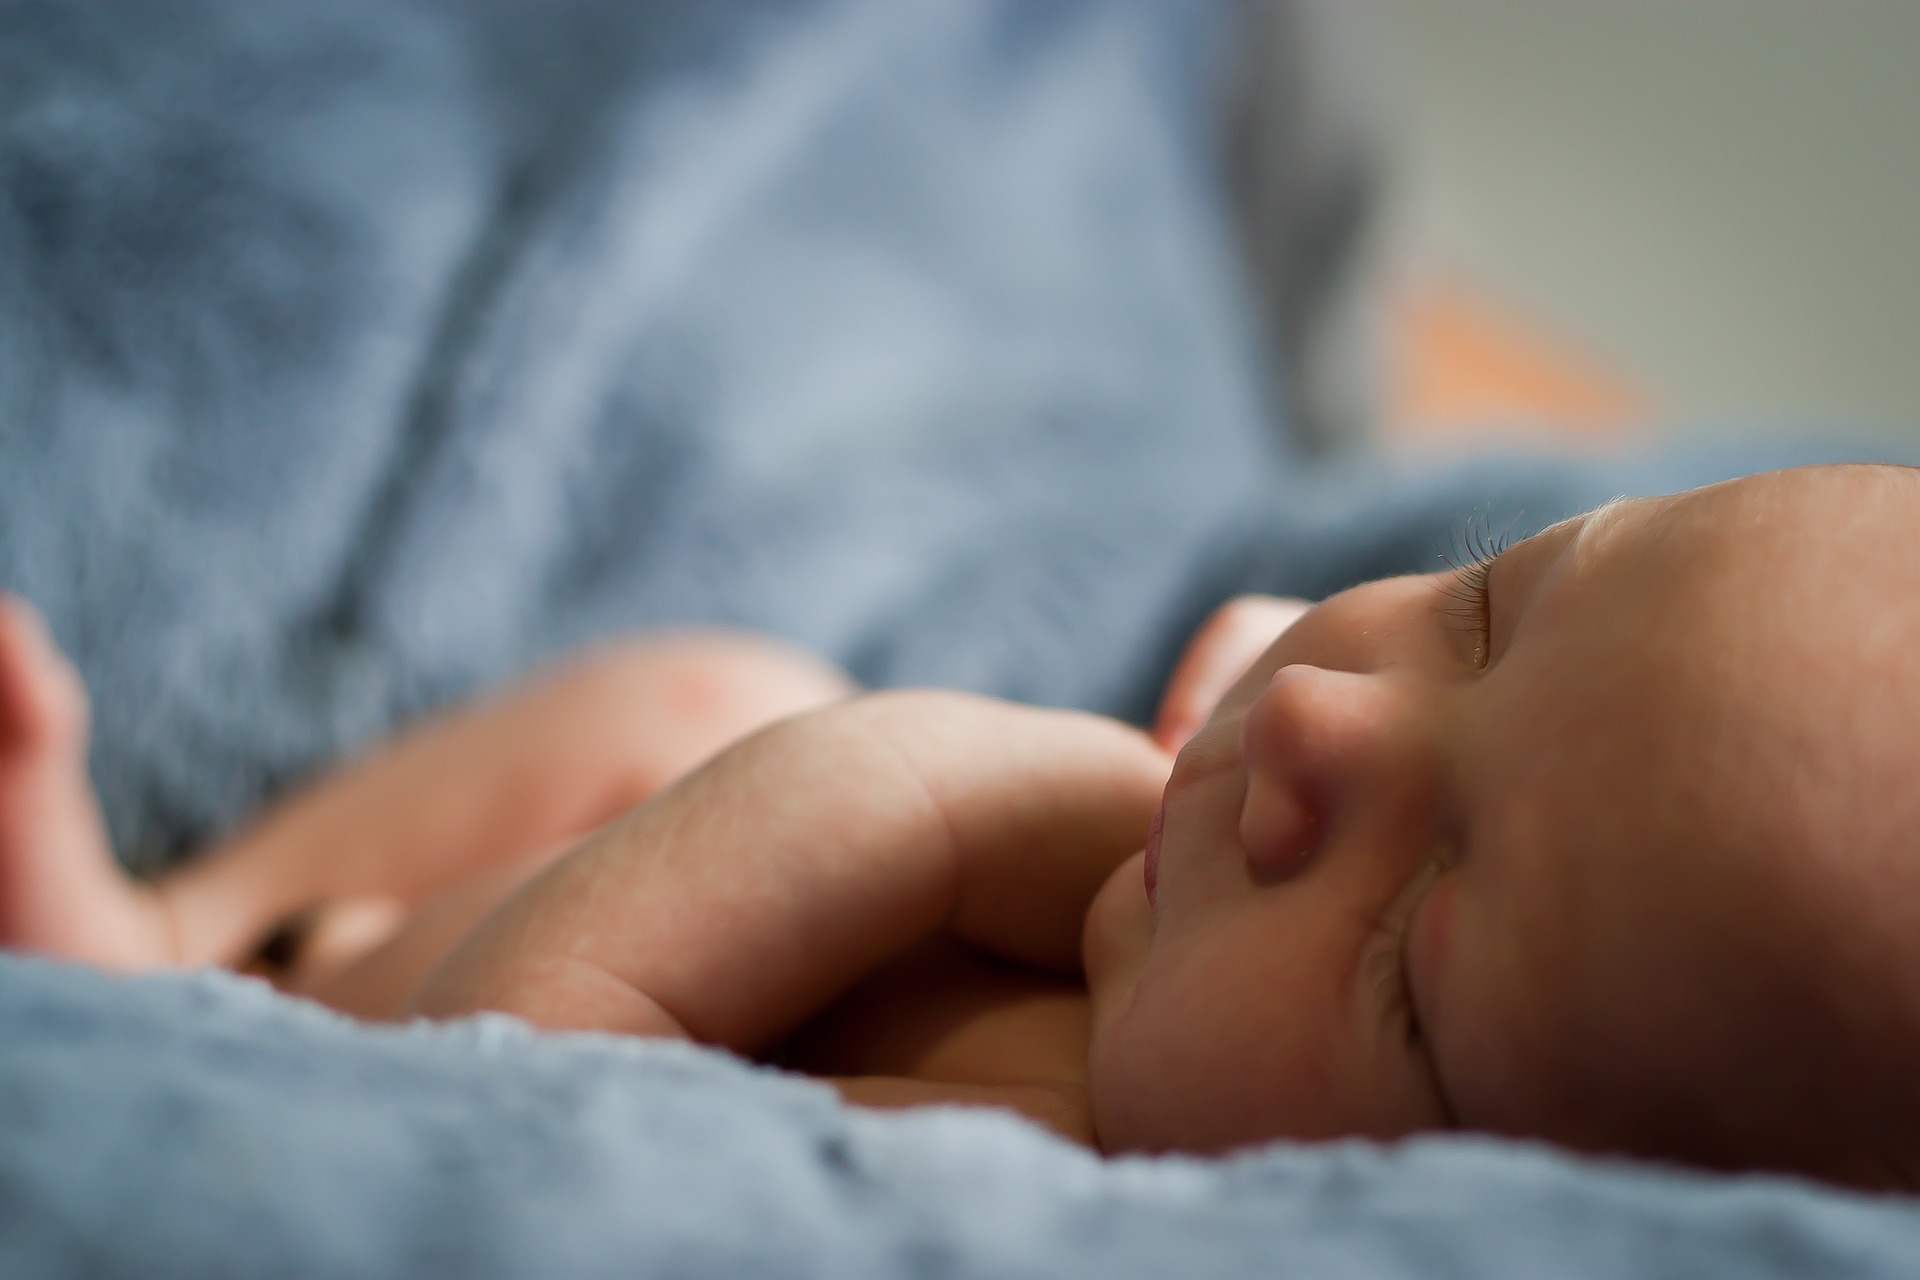 neonato, https://pixabay.com/it/photos/bambino-neonato-innocenza-amore-2585912/ StockSnap CC0